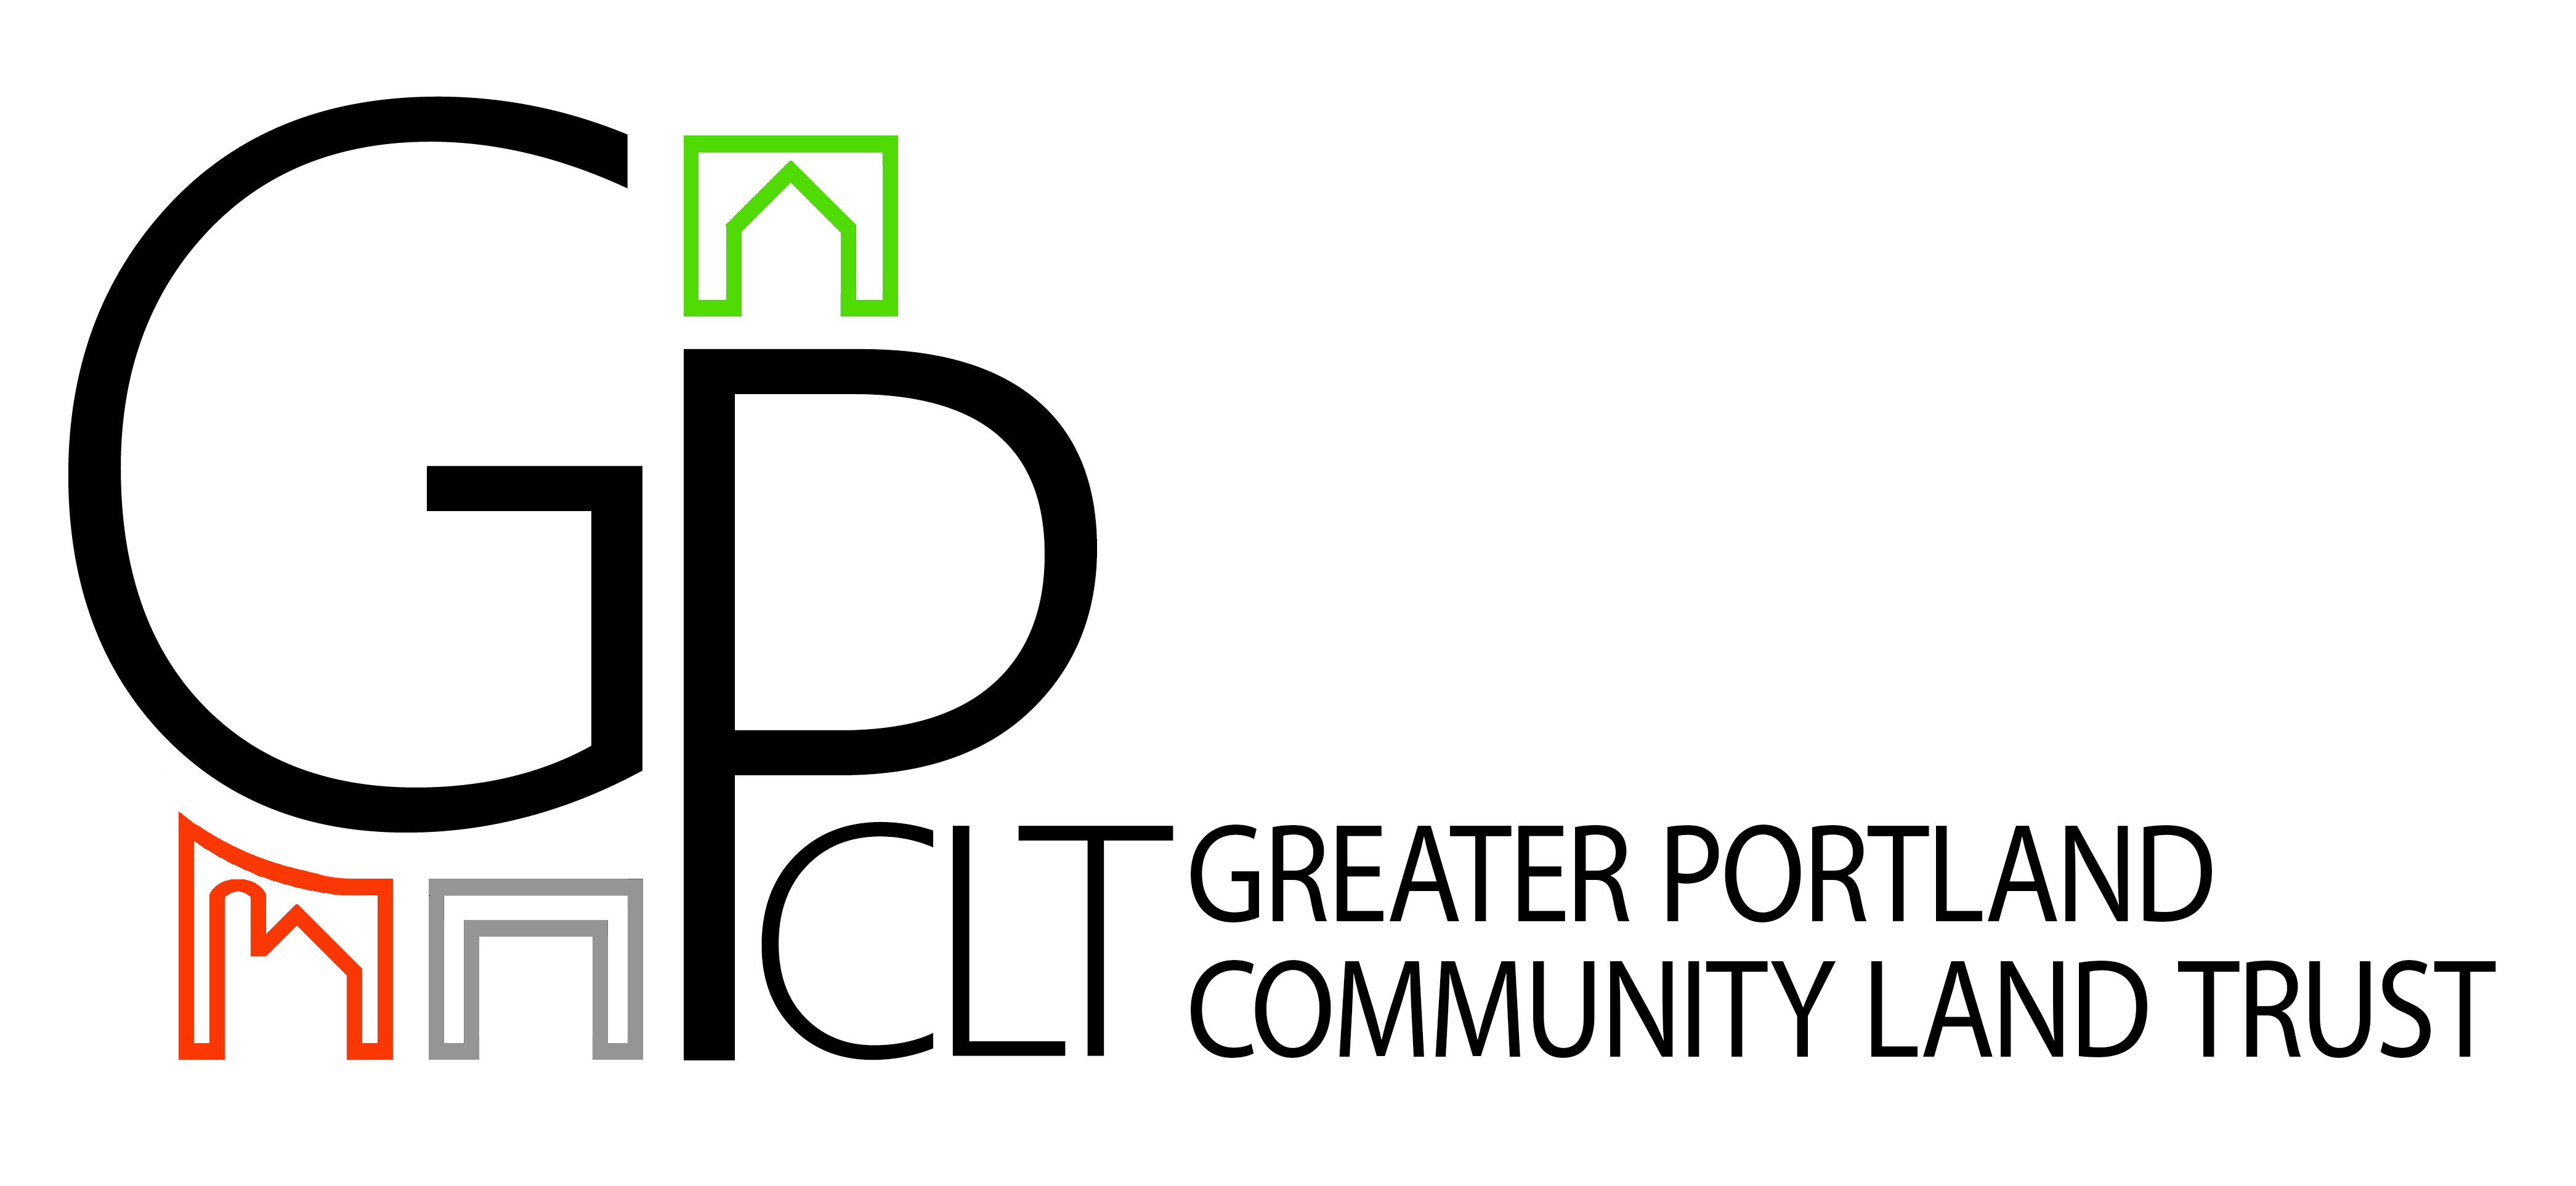 Greater Portland Community Land Trust logo